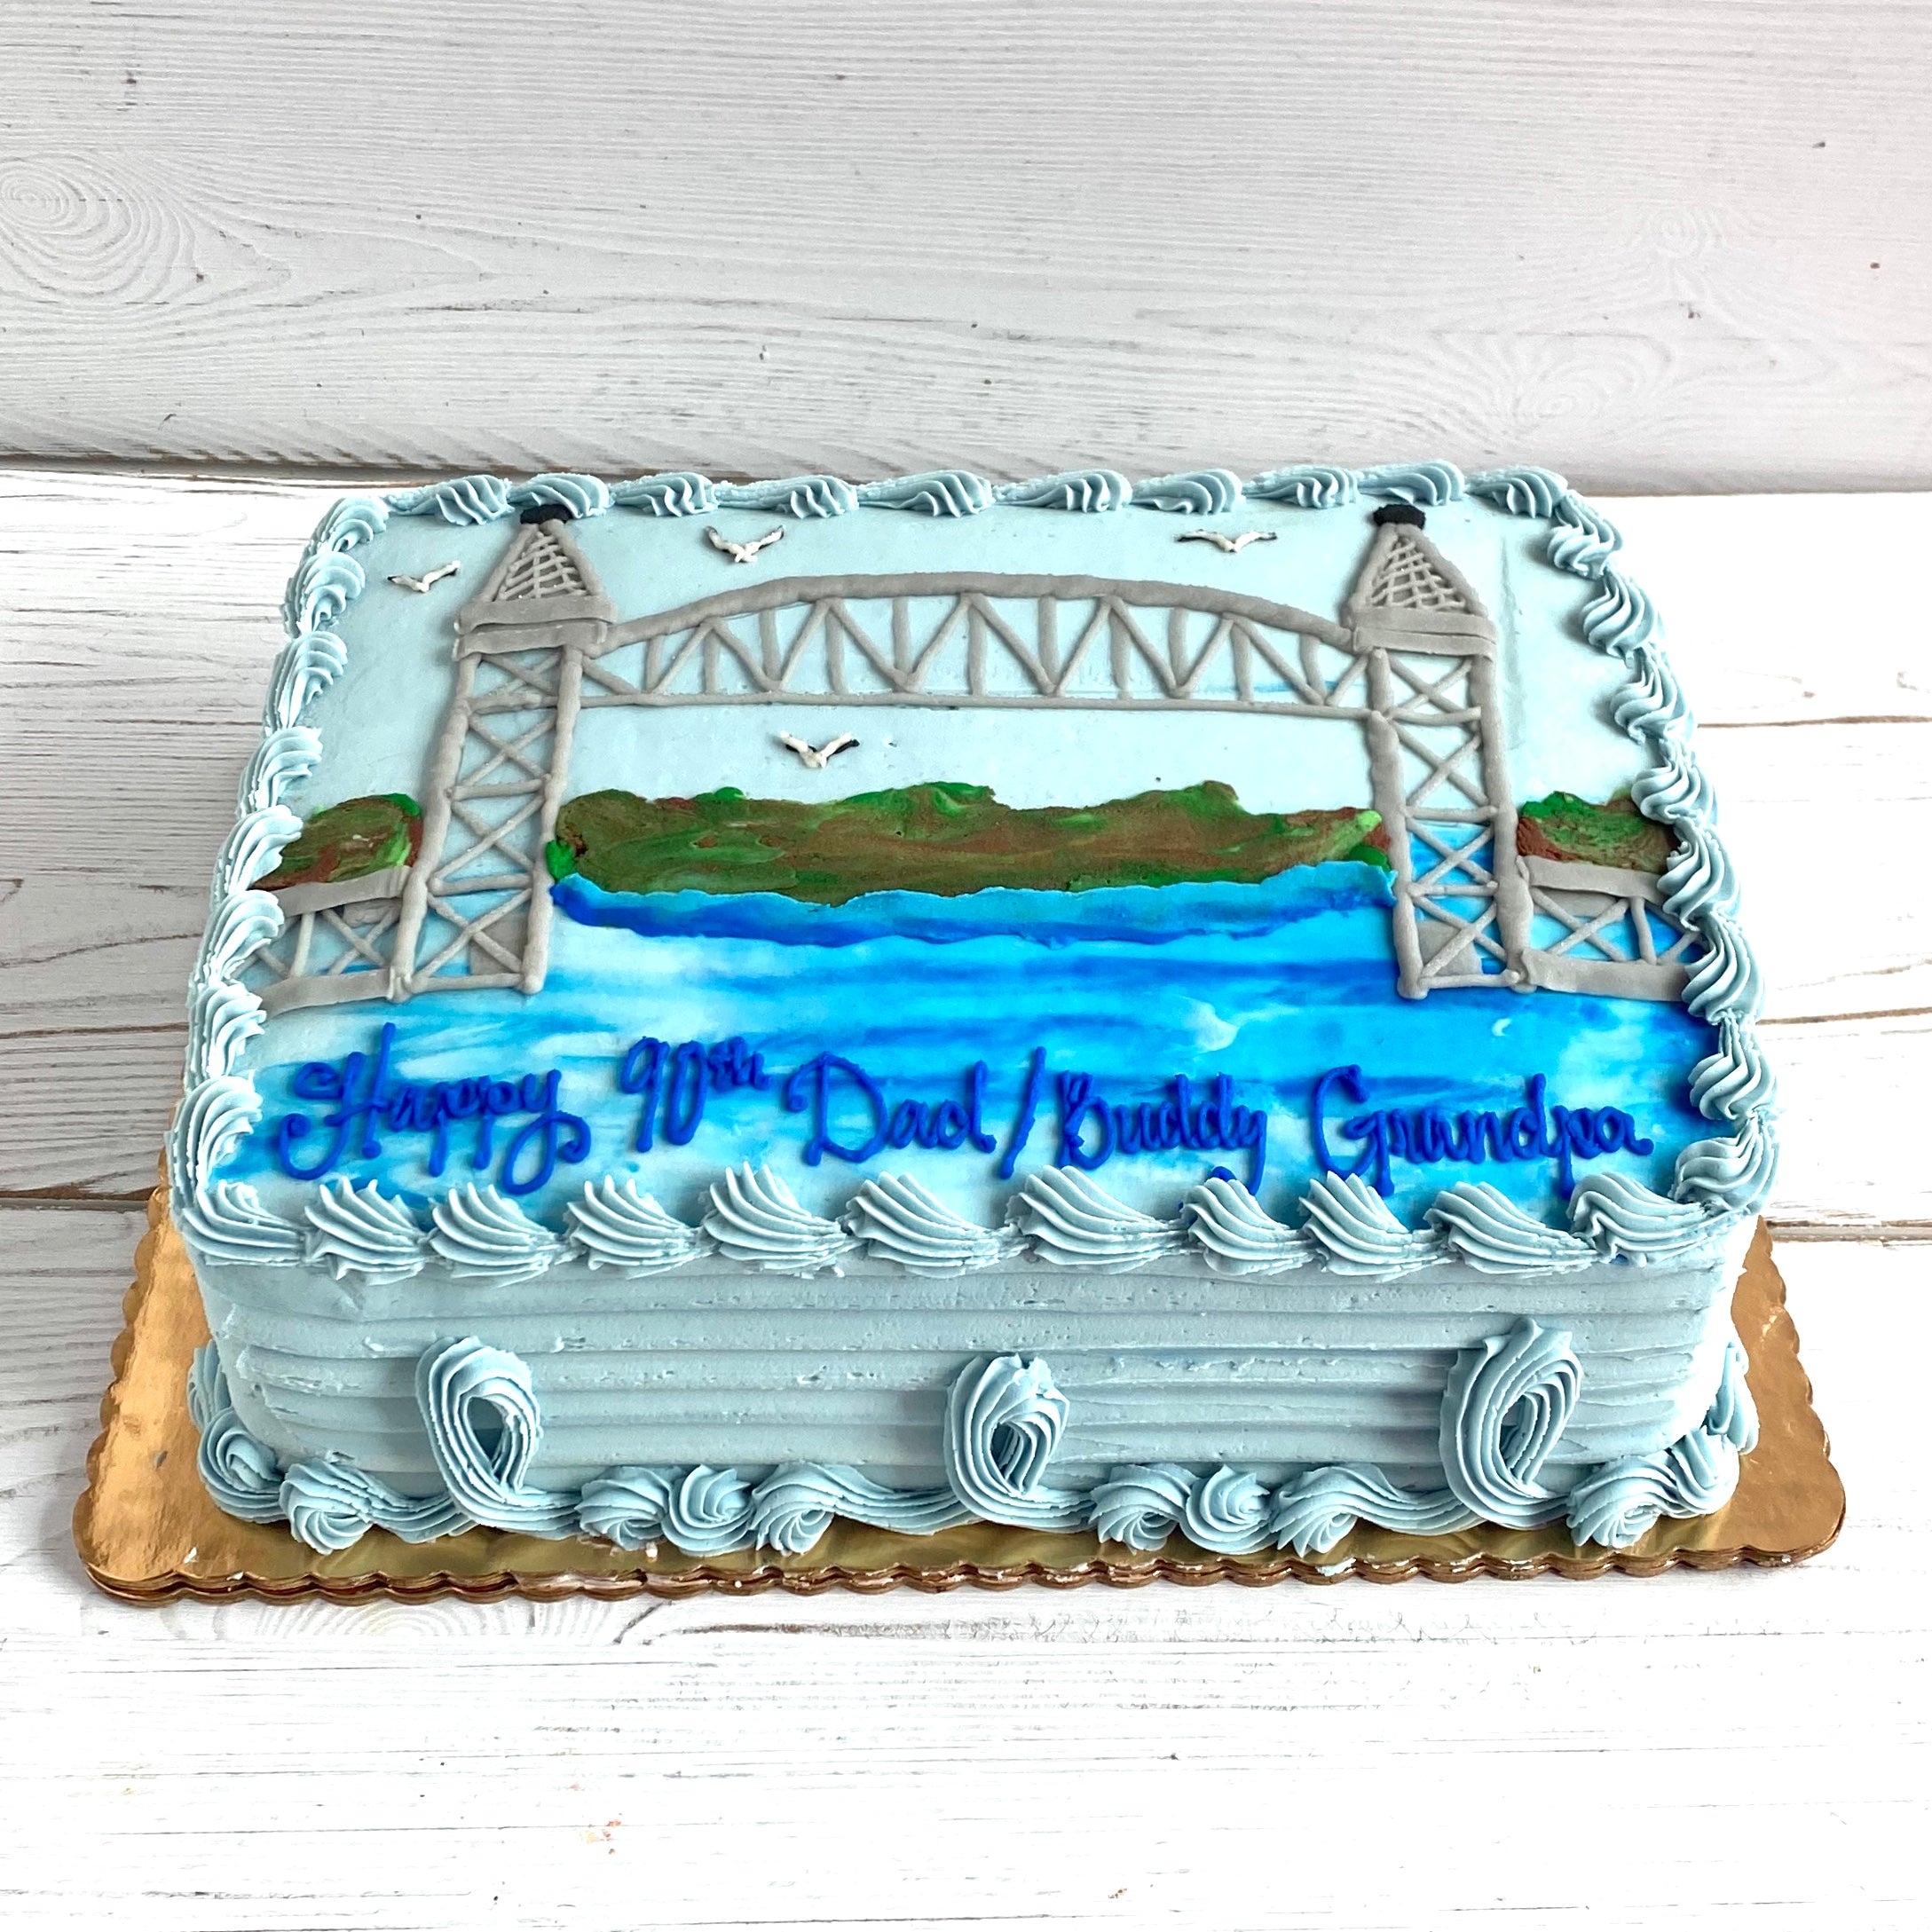 Cape Cod Canal Railroad Bridge Cake